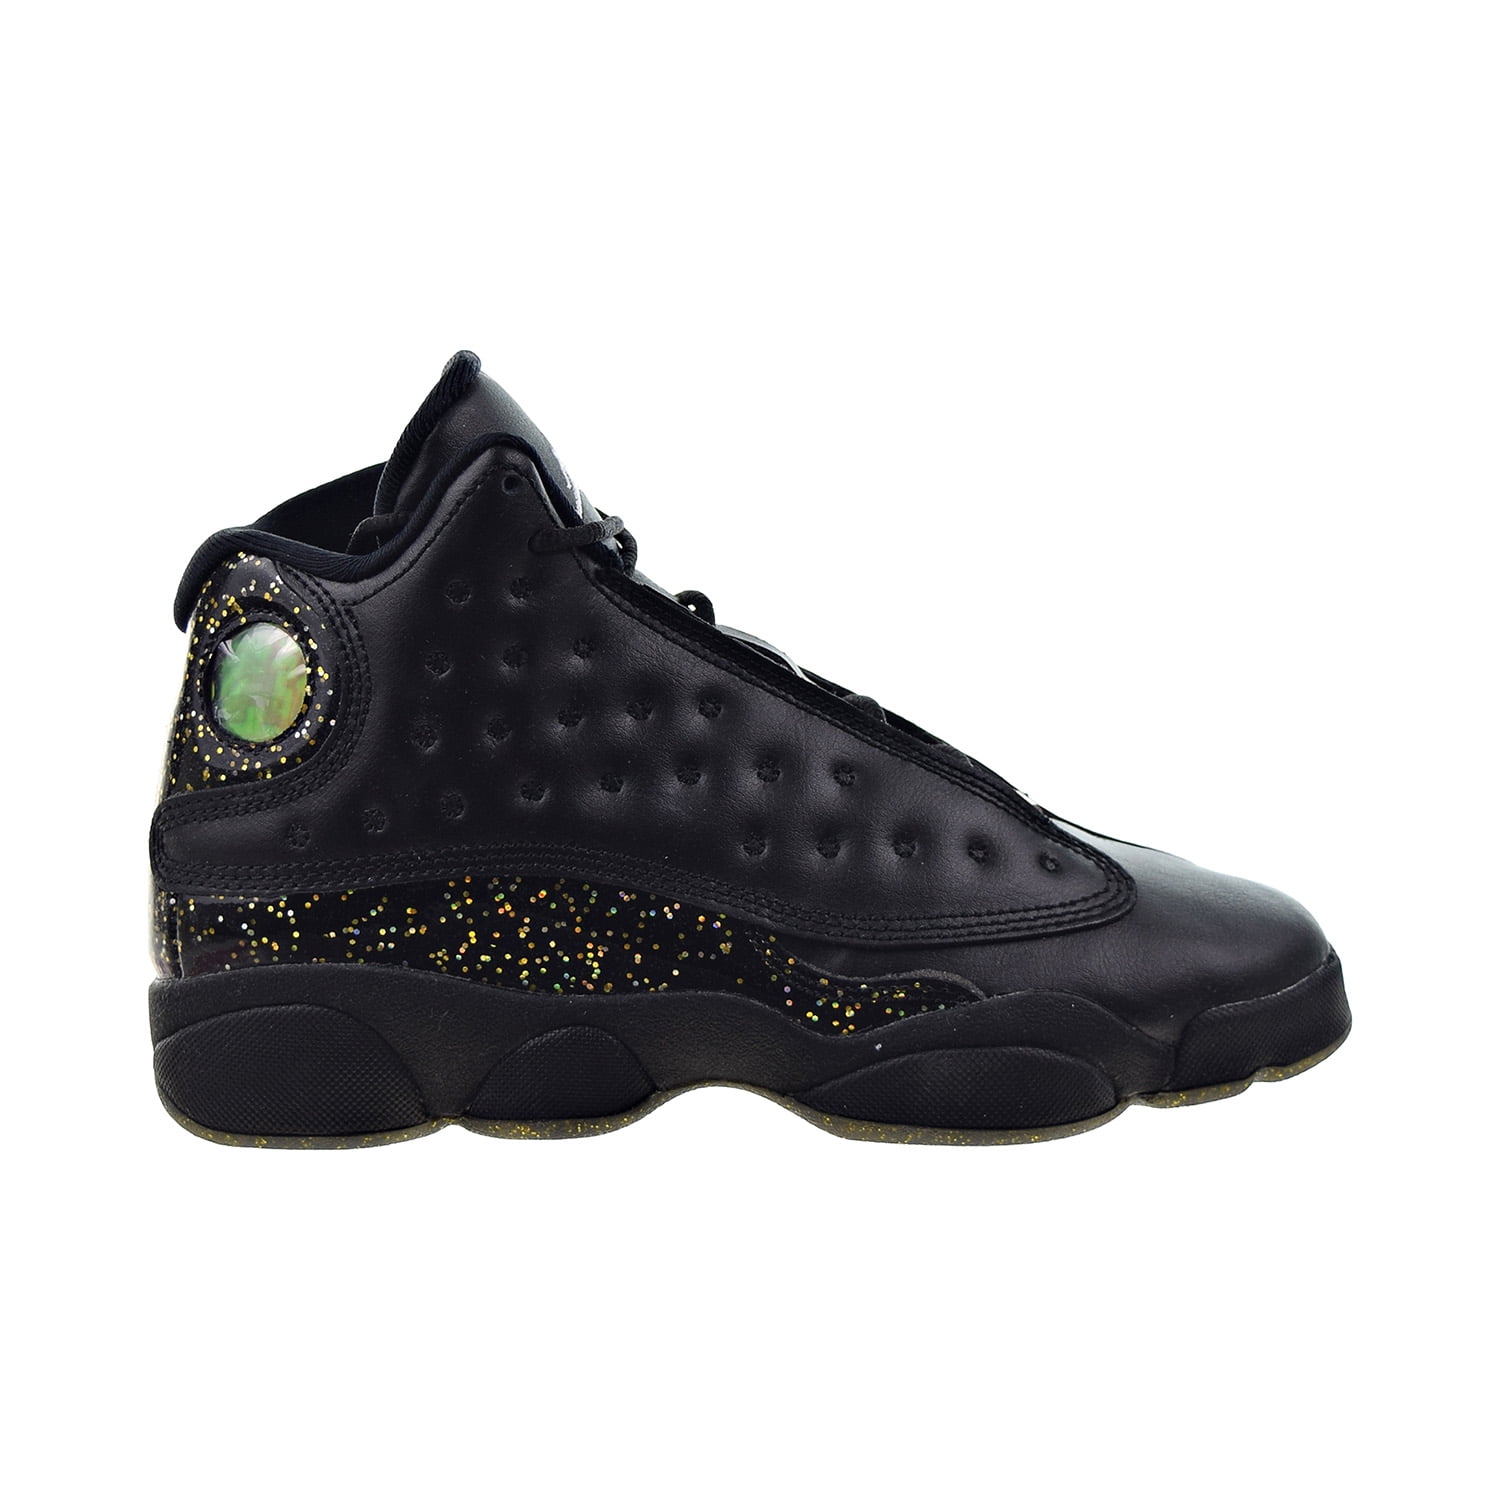 Air Jordan 13 Retro Gold Glitter Big Kids' Shoes Black-Metallic Gold  dc9443-007